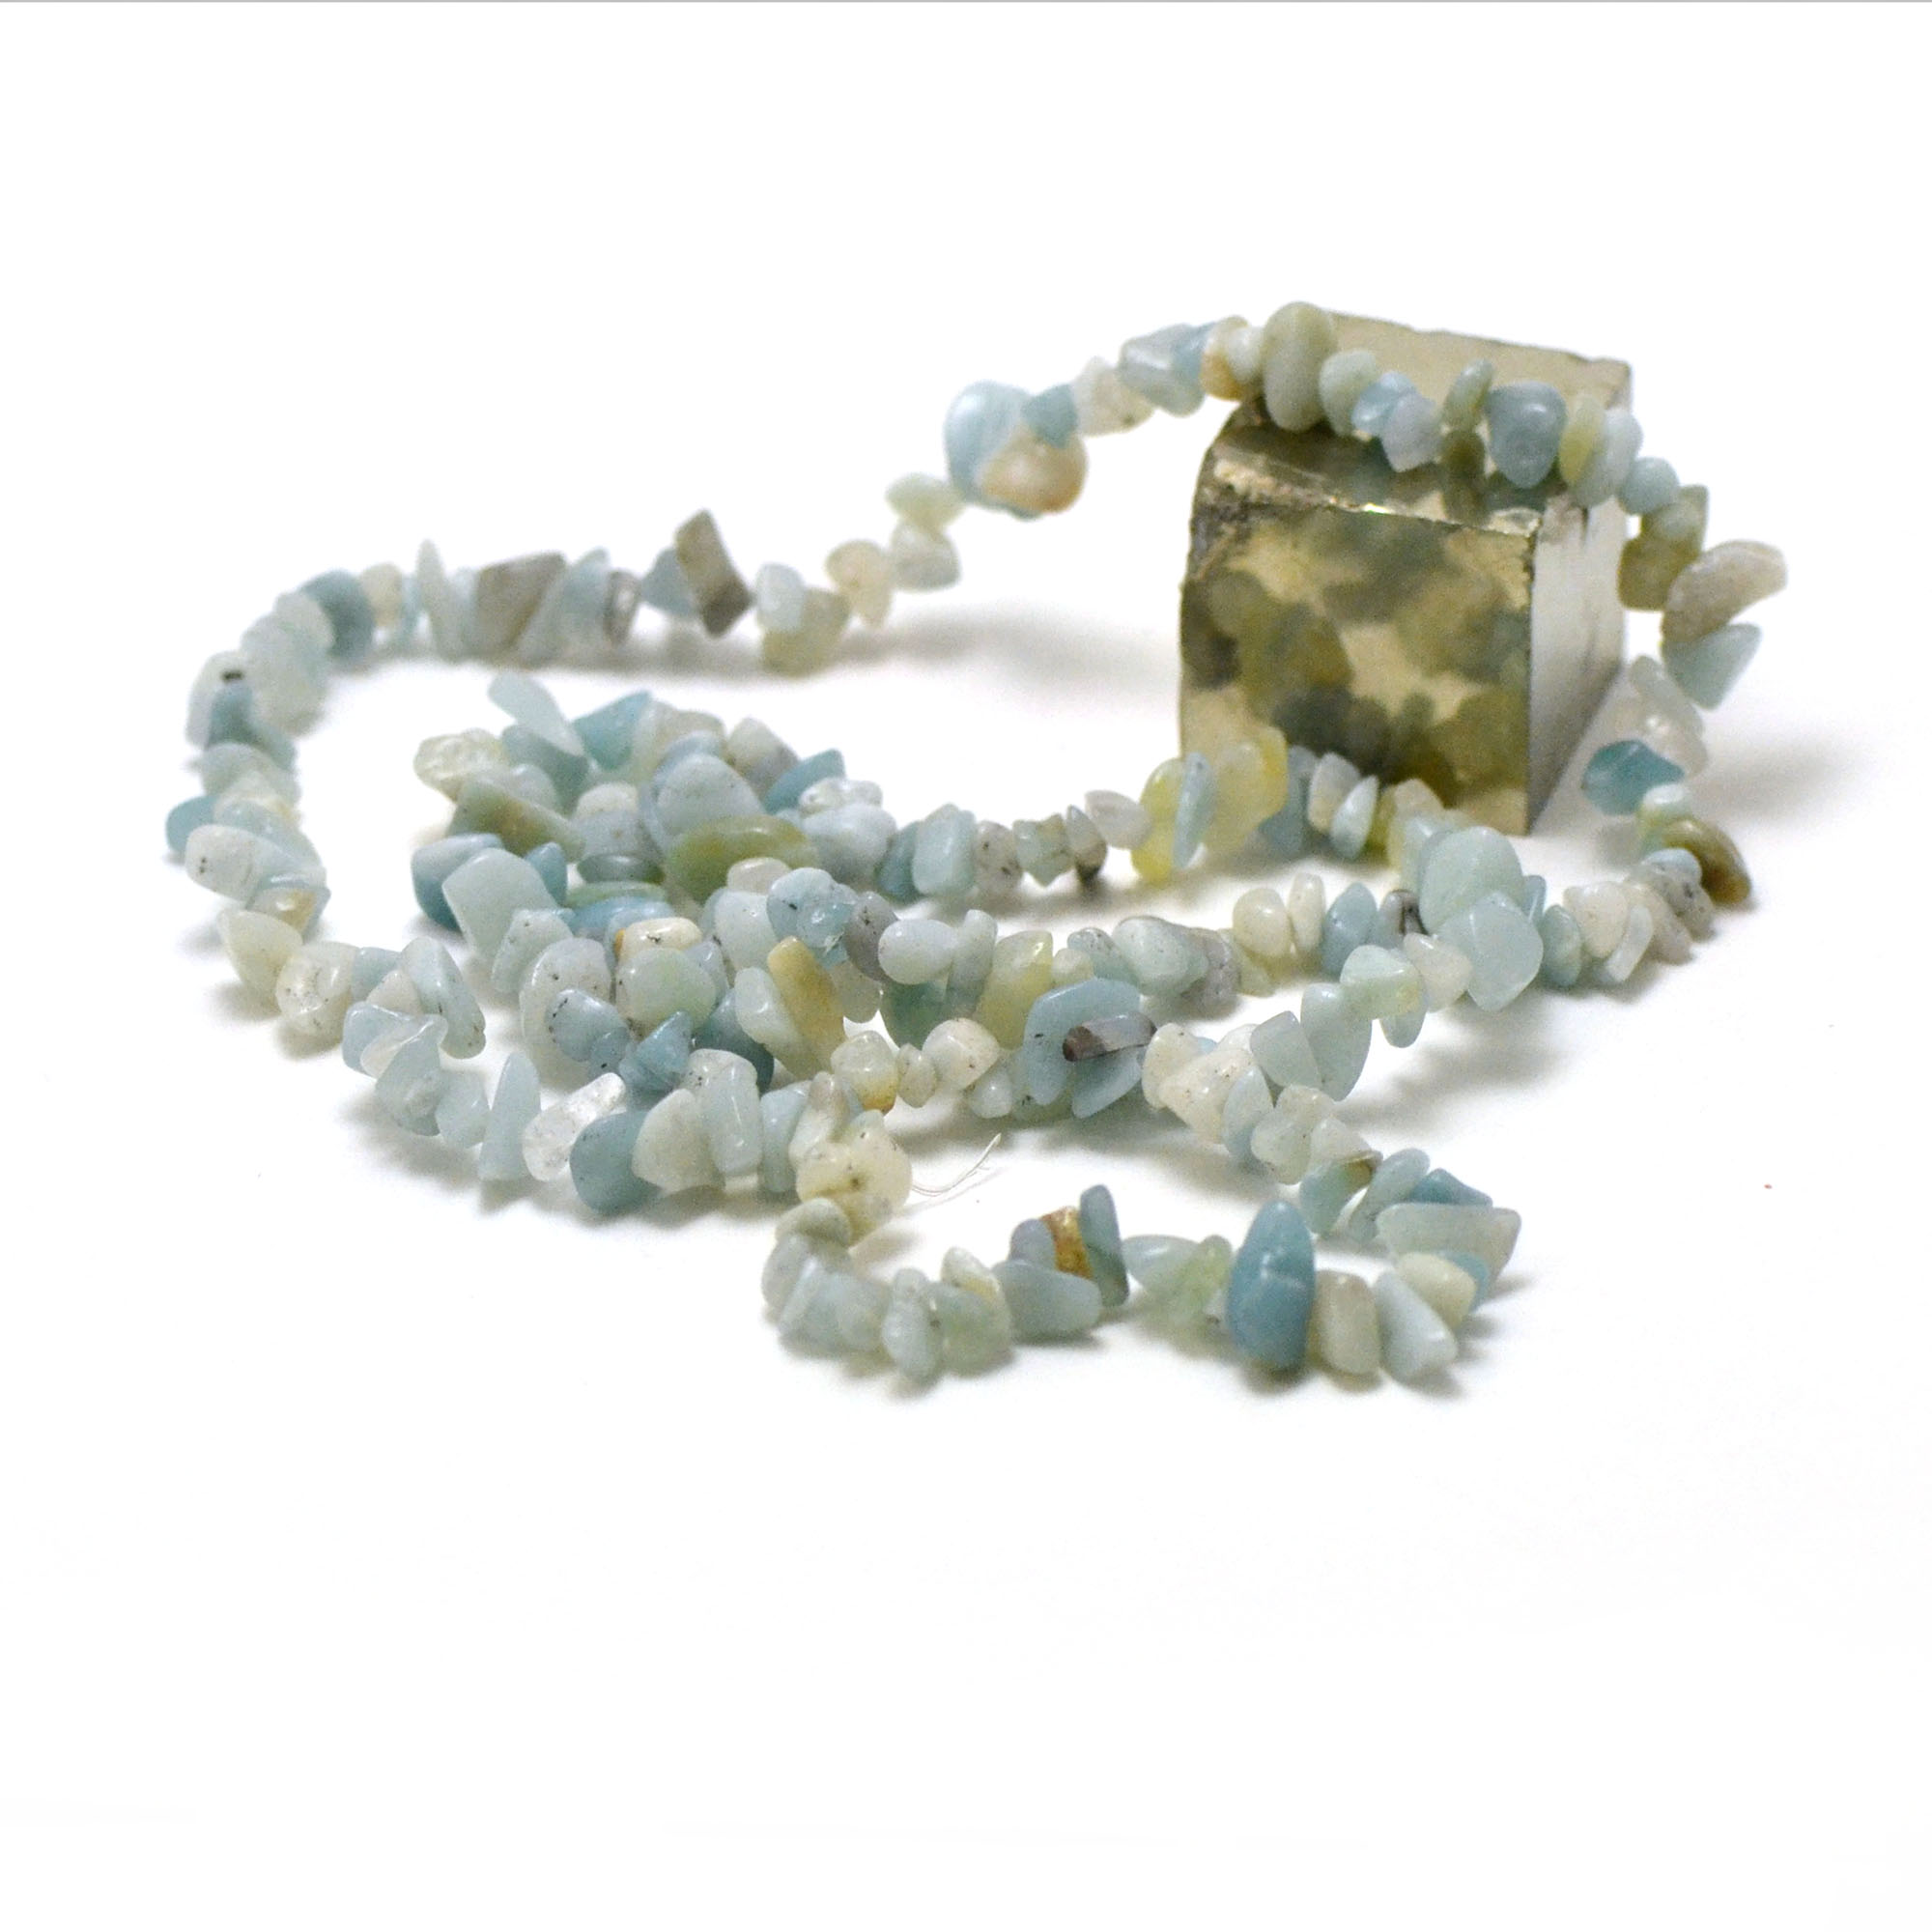 fil 84 cm env 300 perles de amazonite chips, pierre naturelle